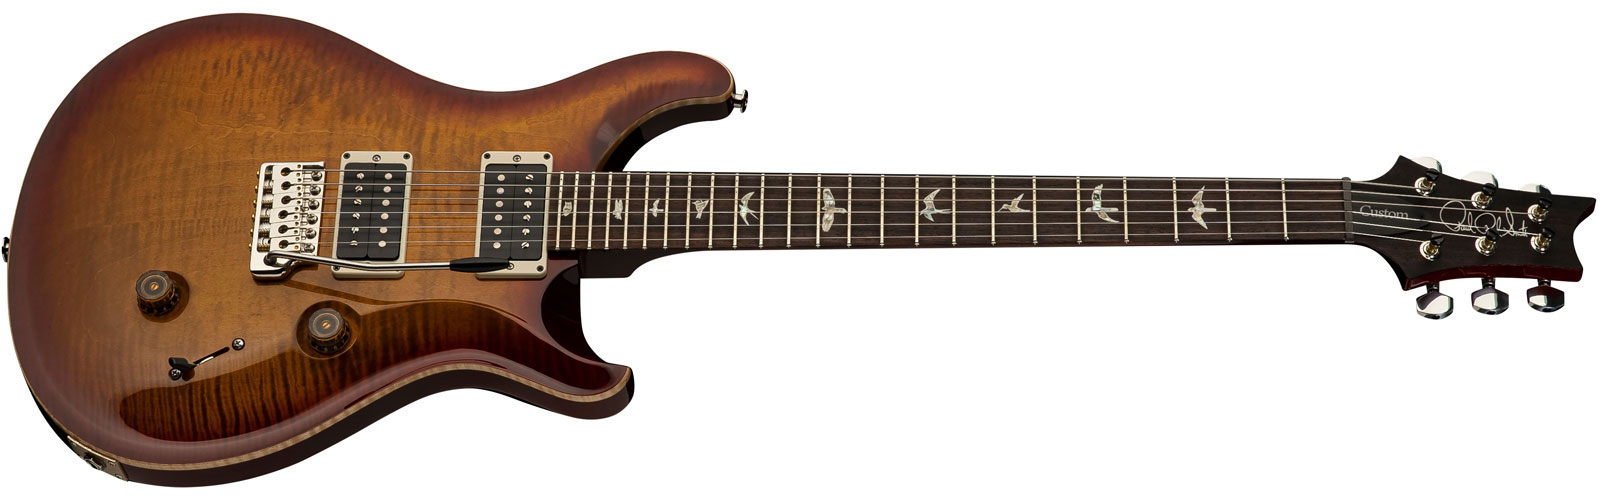 Prs Custom 24 Usa 2h Trem Rw - Dark Cherry Sunburst - Guitarra eléctrica de doble corte. - Variation 1